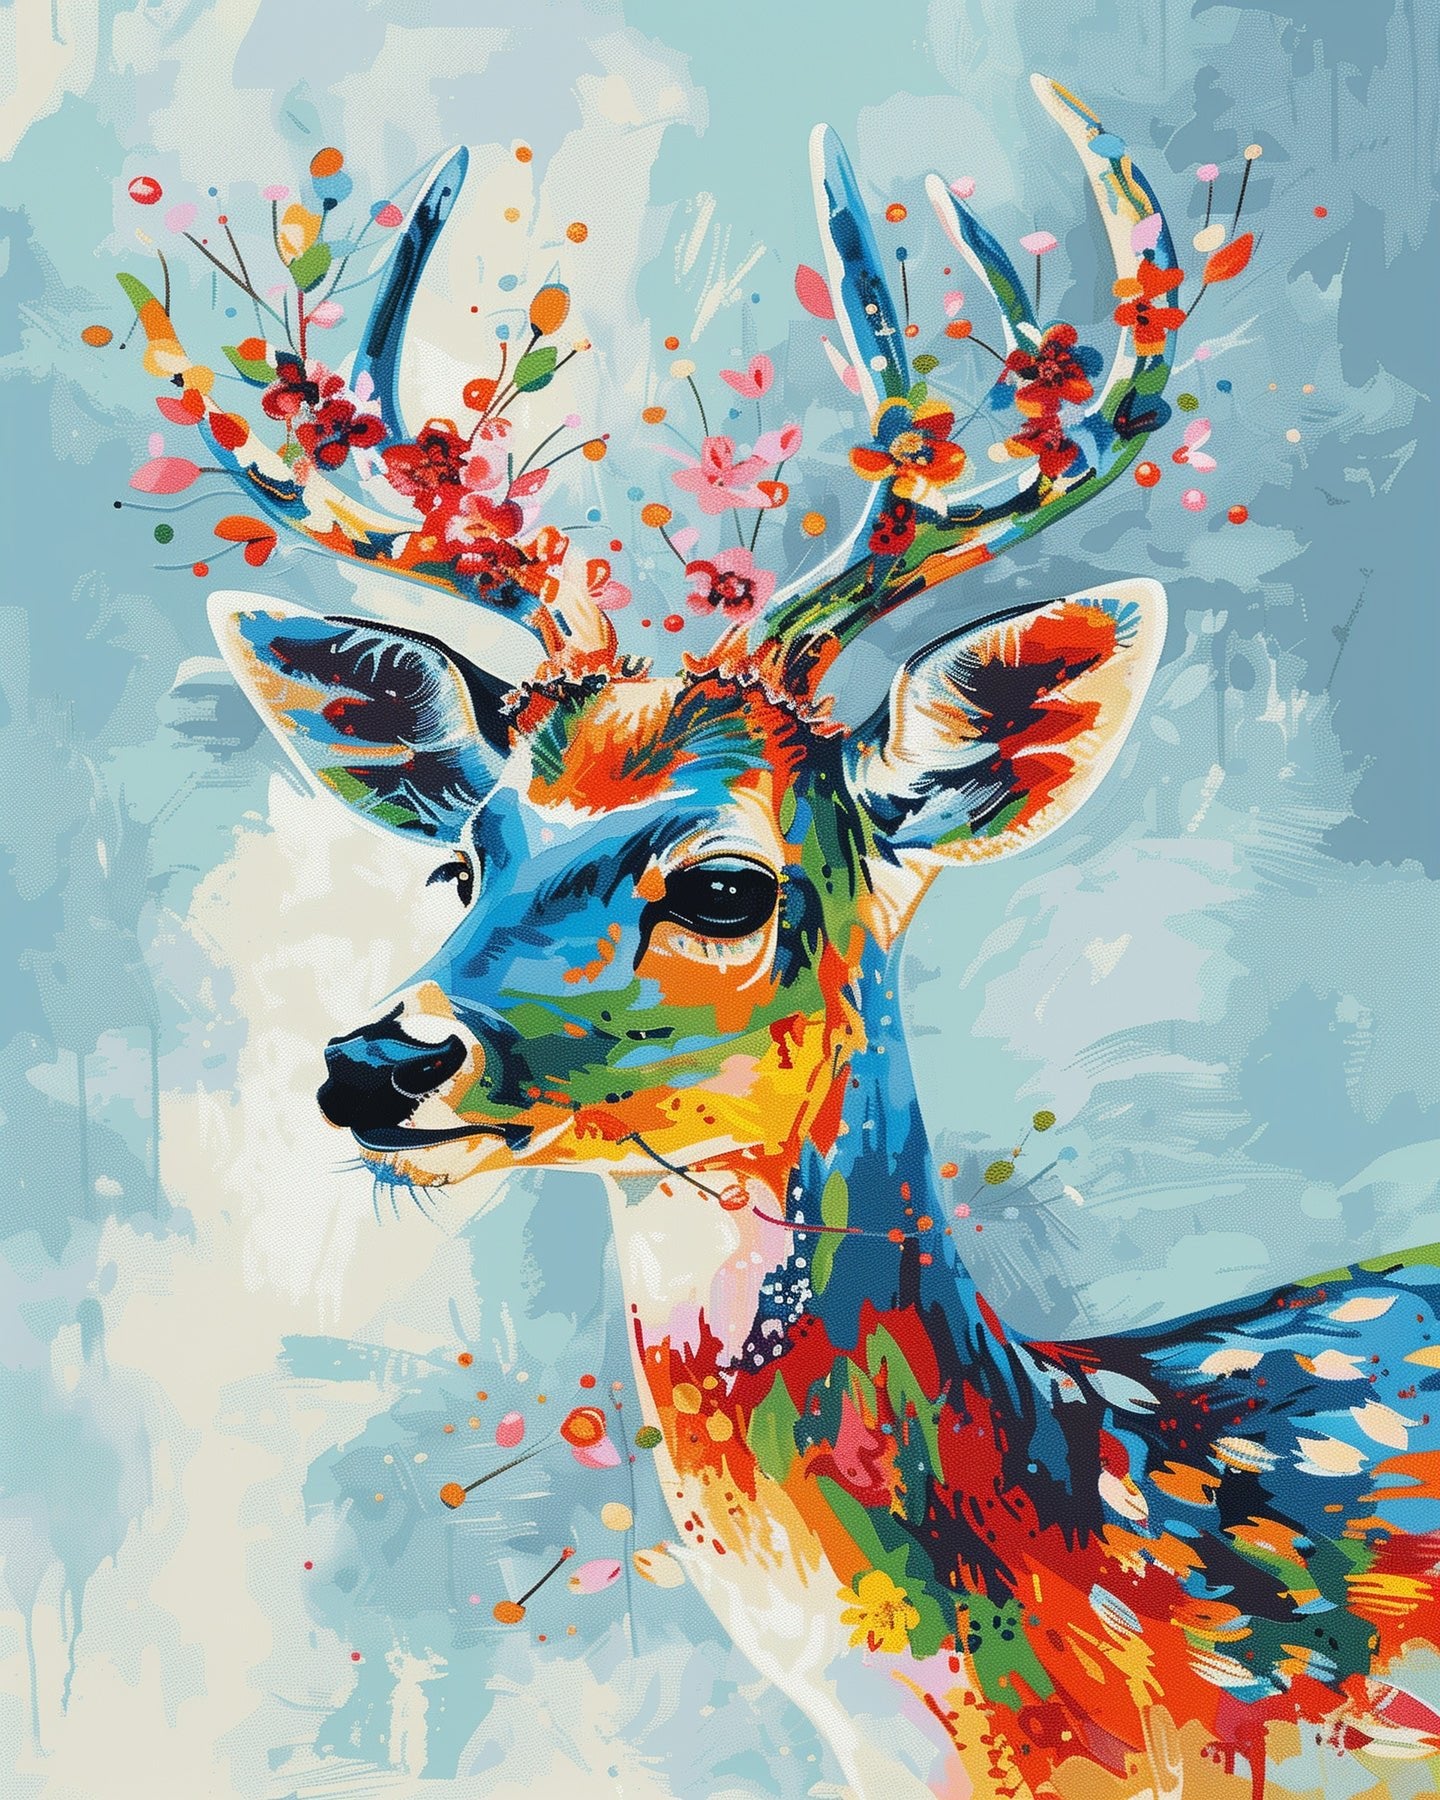 Enchanting Deer - BestPaintByNumbers - Paint by Numbers Fixed Kit